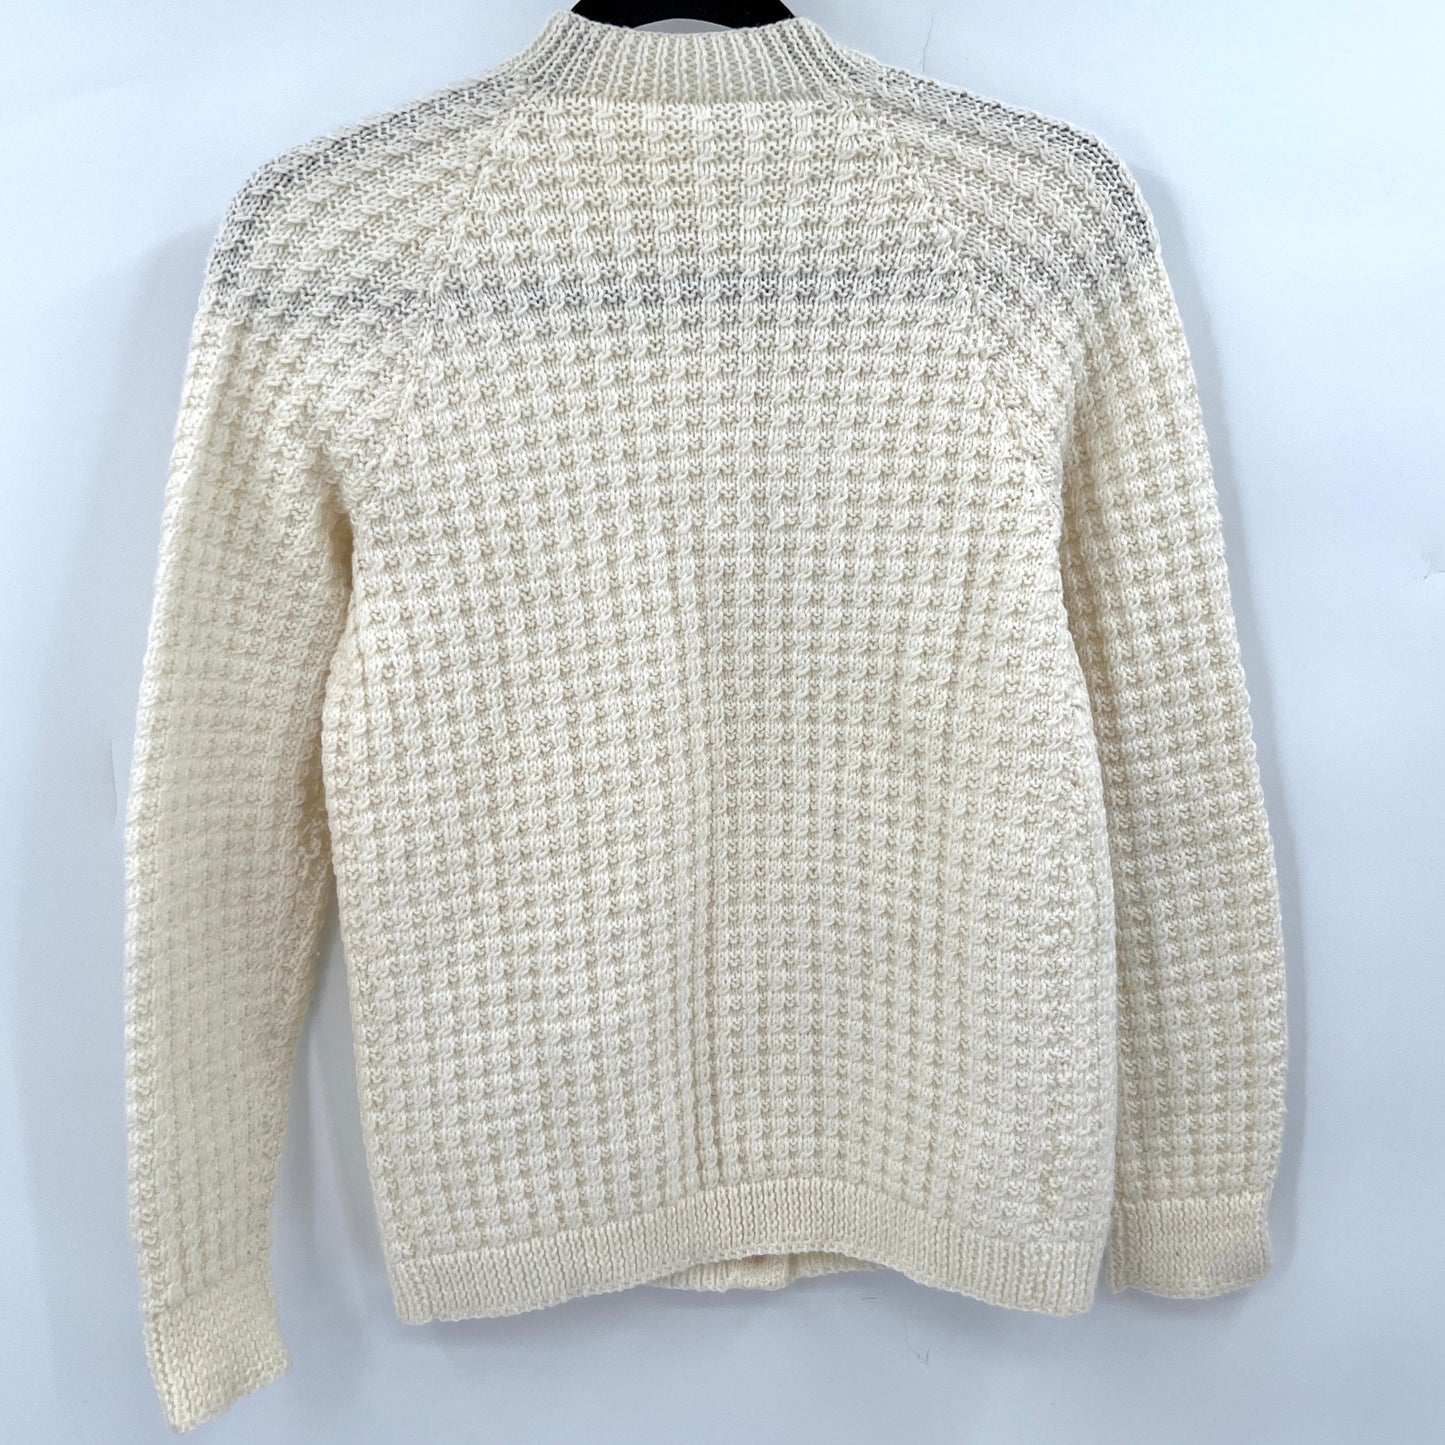 Vintage Textured Knit Cardigan XS/S